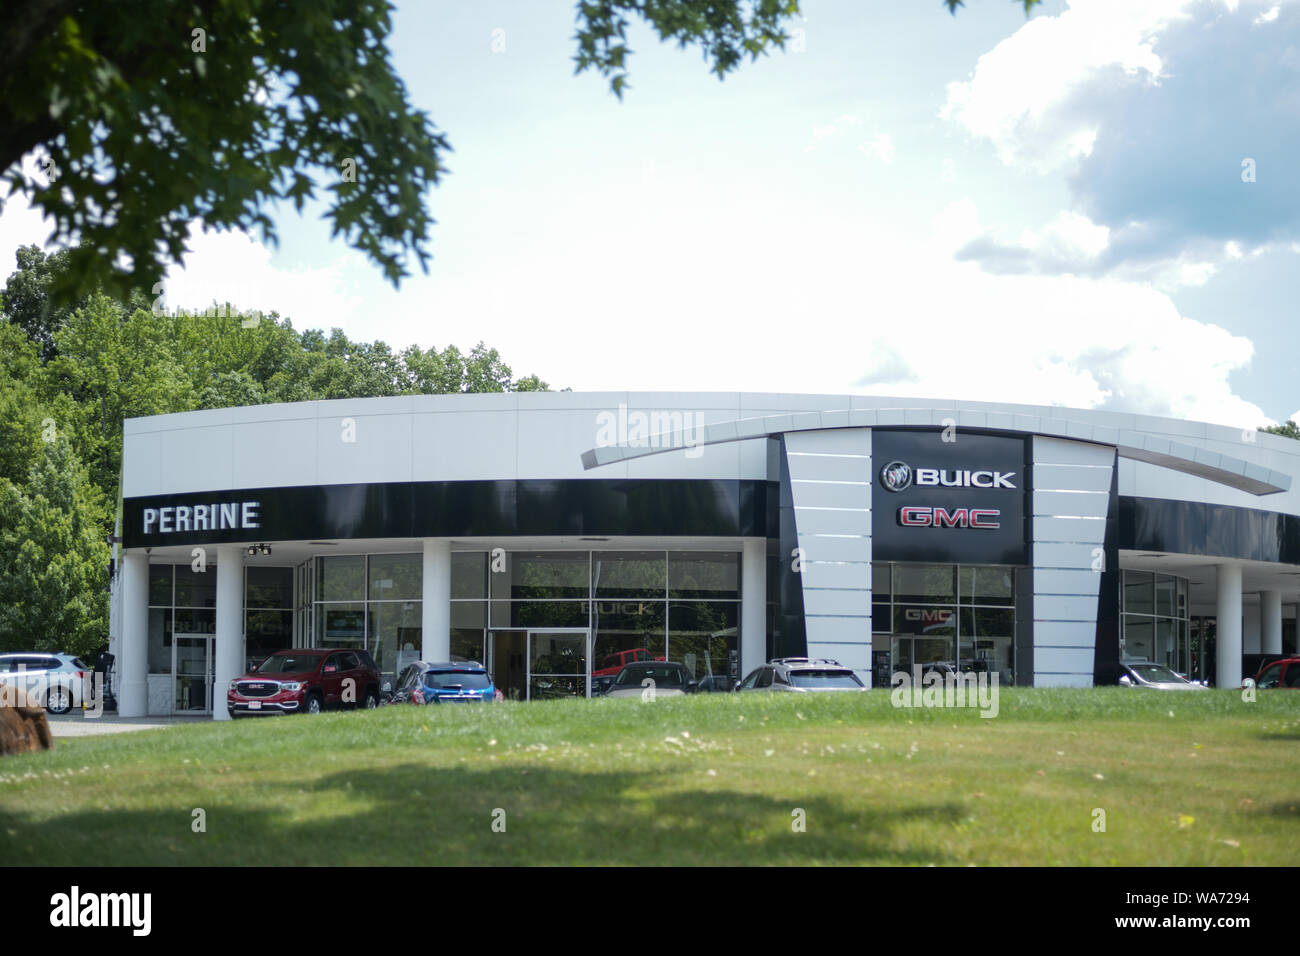 Princeton New Jersey, USA, June 23, 2019: Buick GMC automobile dealership exterior and logo. - Image Stock Photo